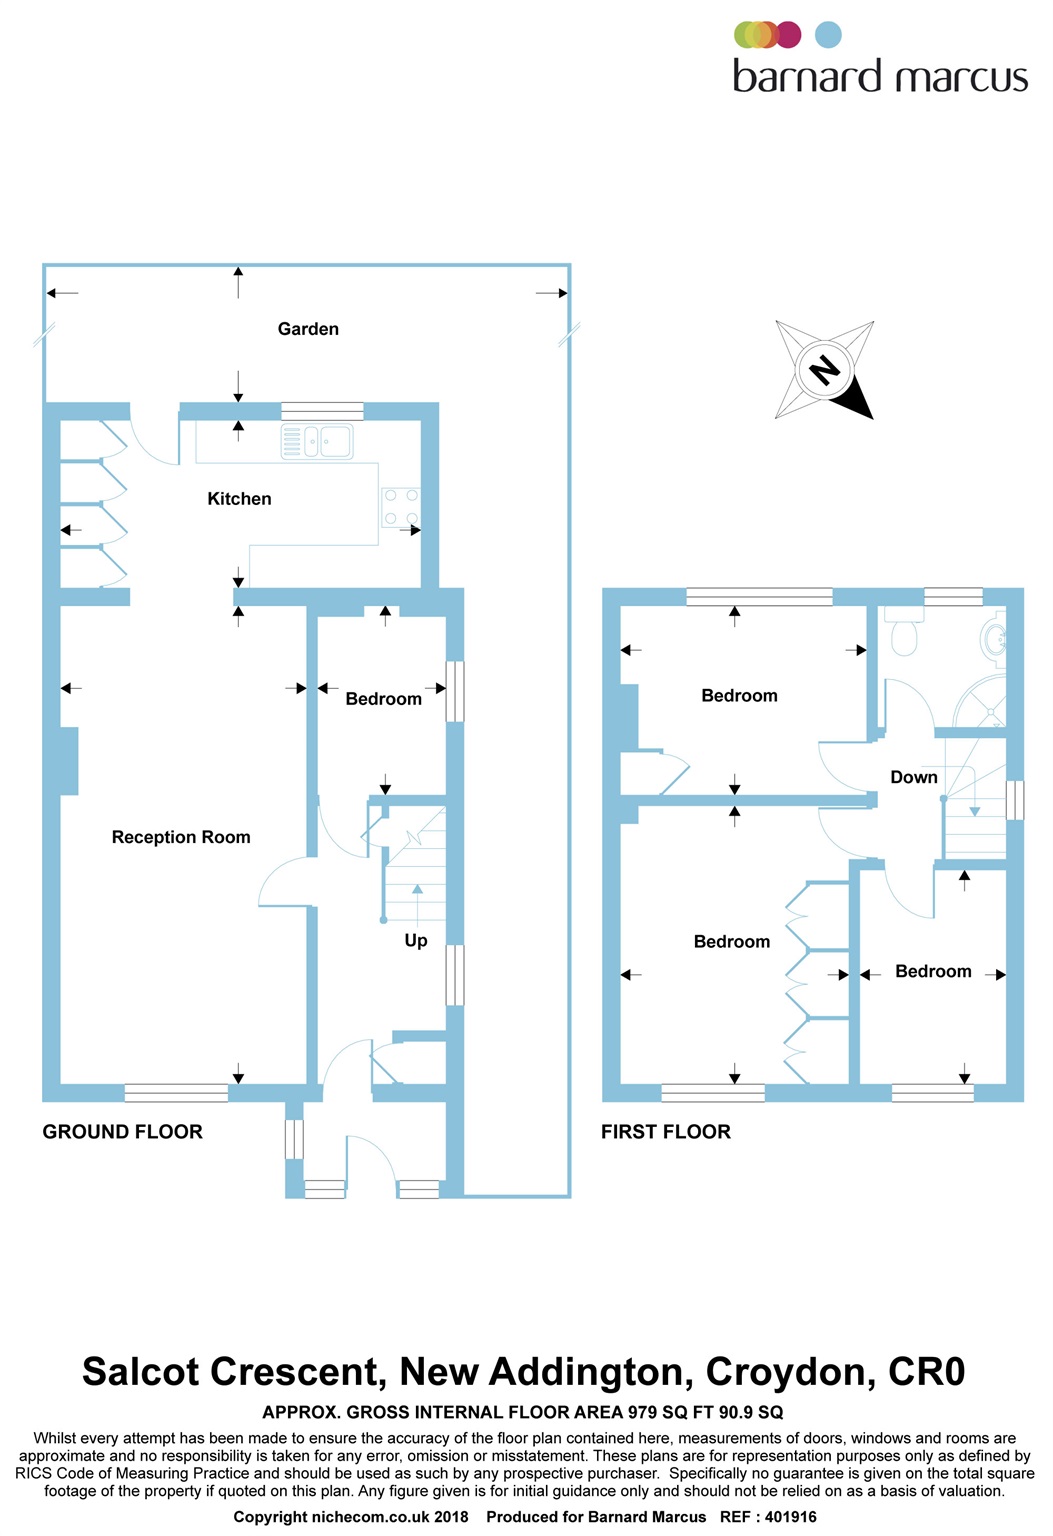 4 Bedrooms Semi-detached house for sale in Salcot Crescent, New Addington, Croydon CR0